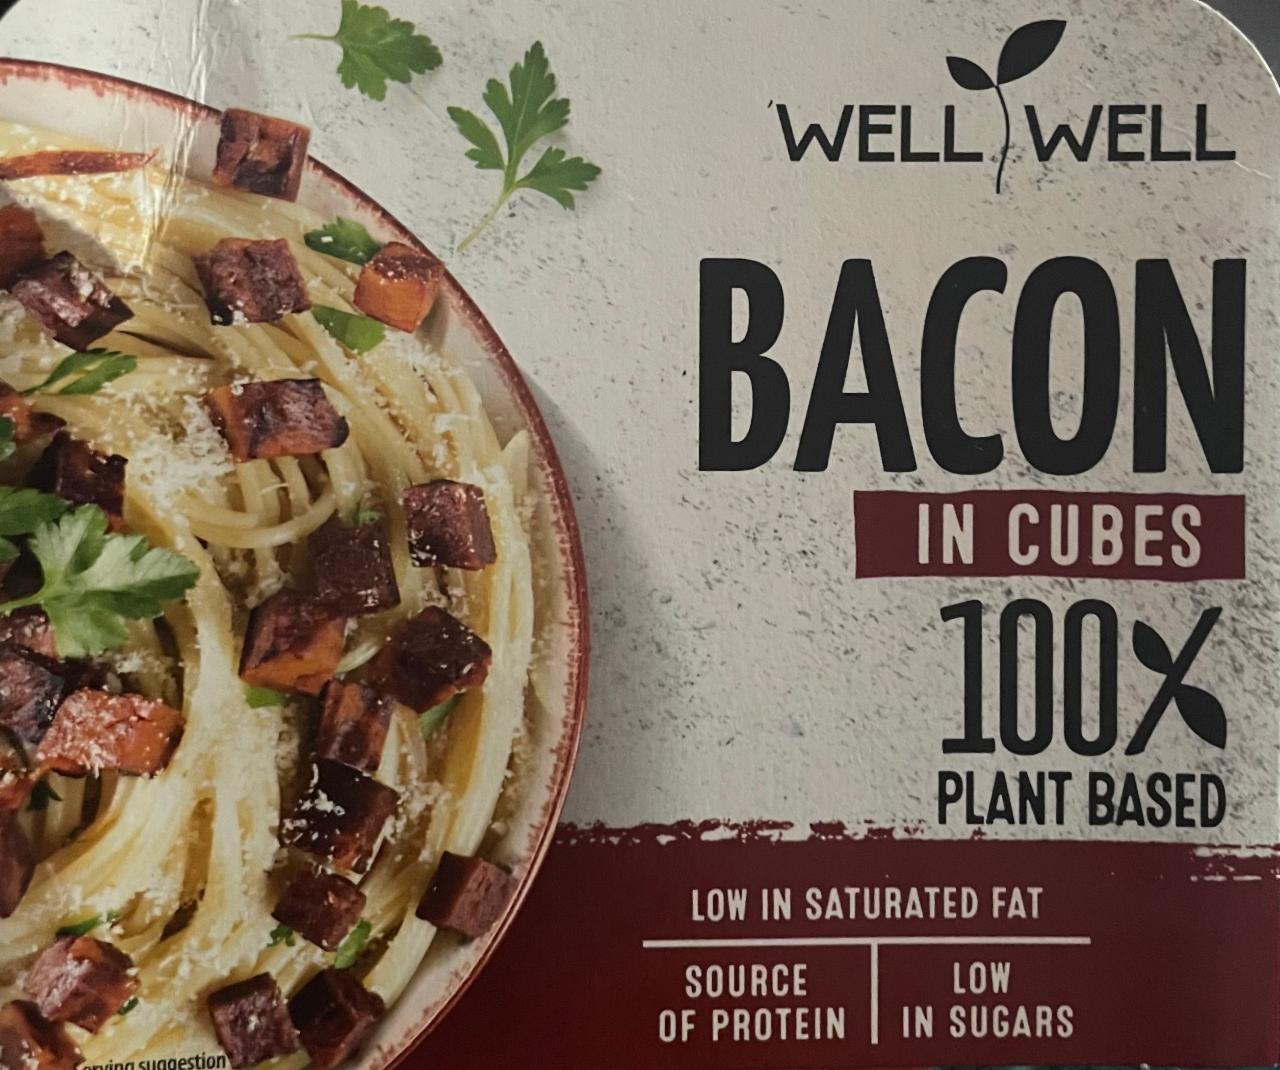 Képek - Bacon in Cubes 100% plant based Well Wel